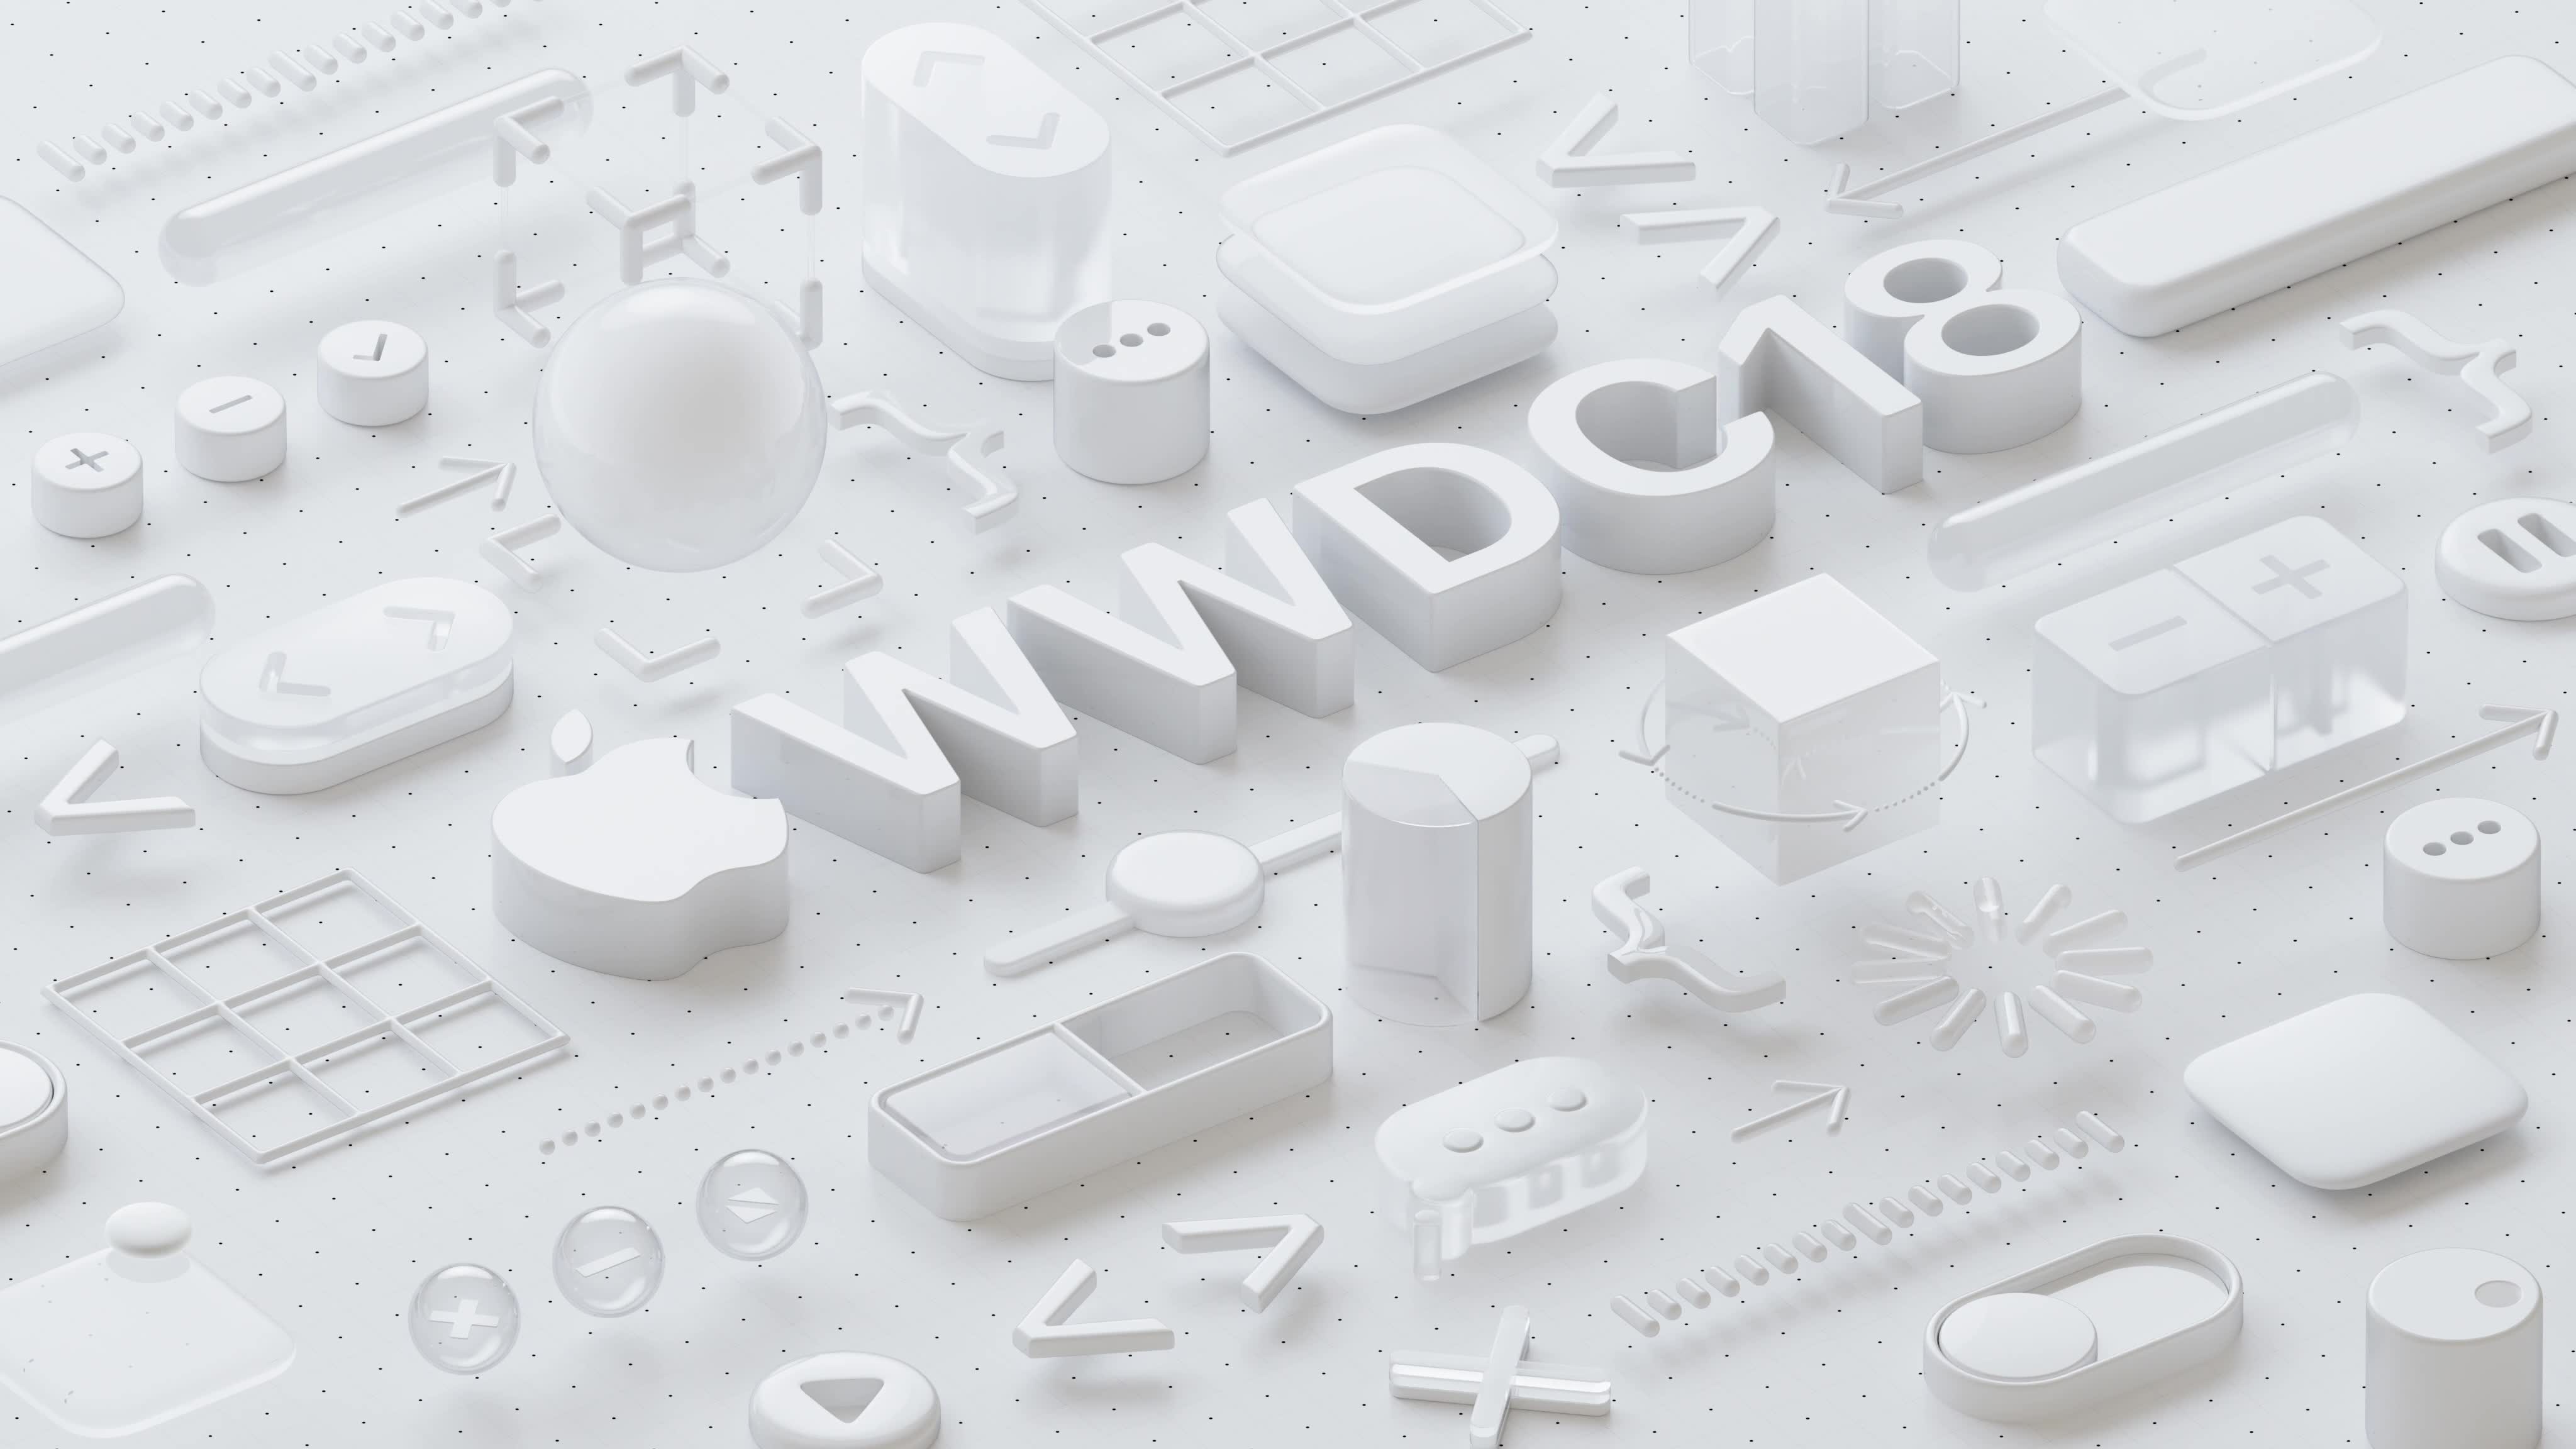 WWDC 2018, tin tức apple mới nhất, tính năng mới trên iOS 12, apple pay trên ios 12, sự kiện lớn nhất apple 2018, thông tin iphone mới, tin tức ios, tin tức công nghệ, tính năng mới iphone, ftios, ftblog